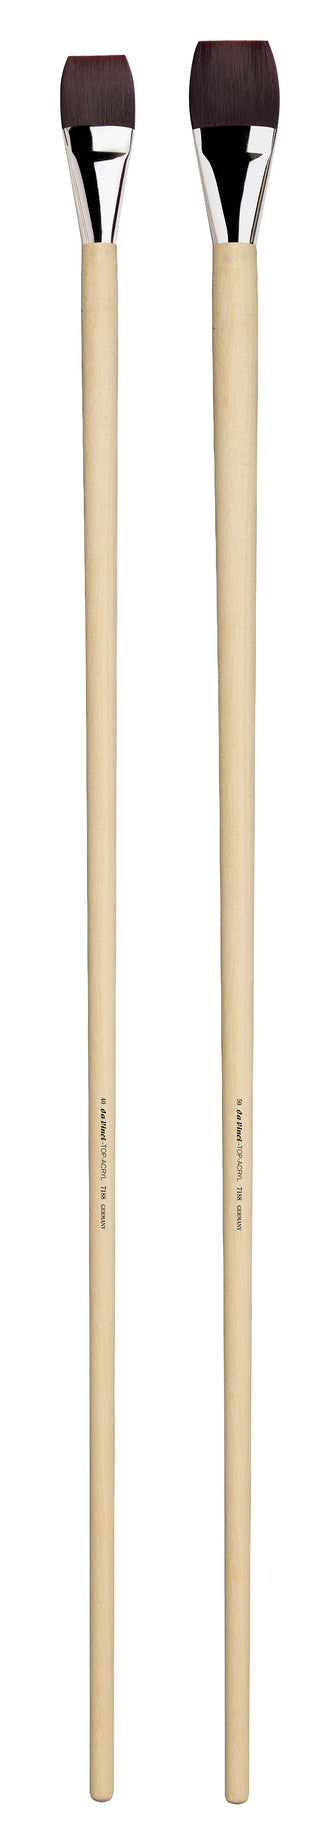 Da Vinci TOP-ACRYL Series 7188 Synthetic Flat Brushes - 100cm Handle